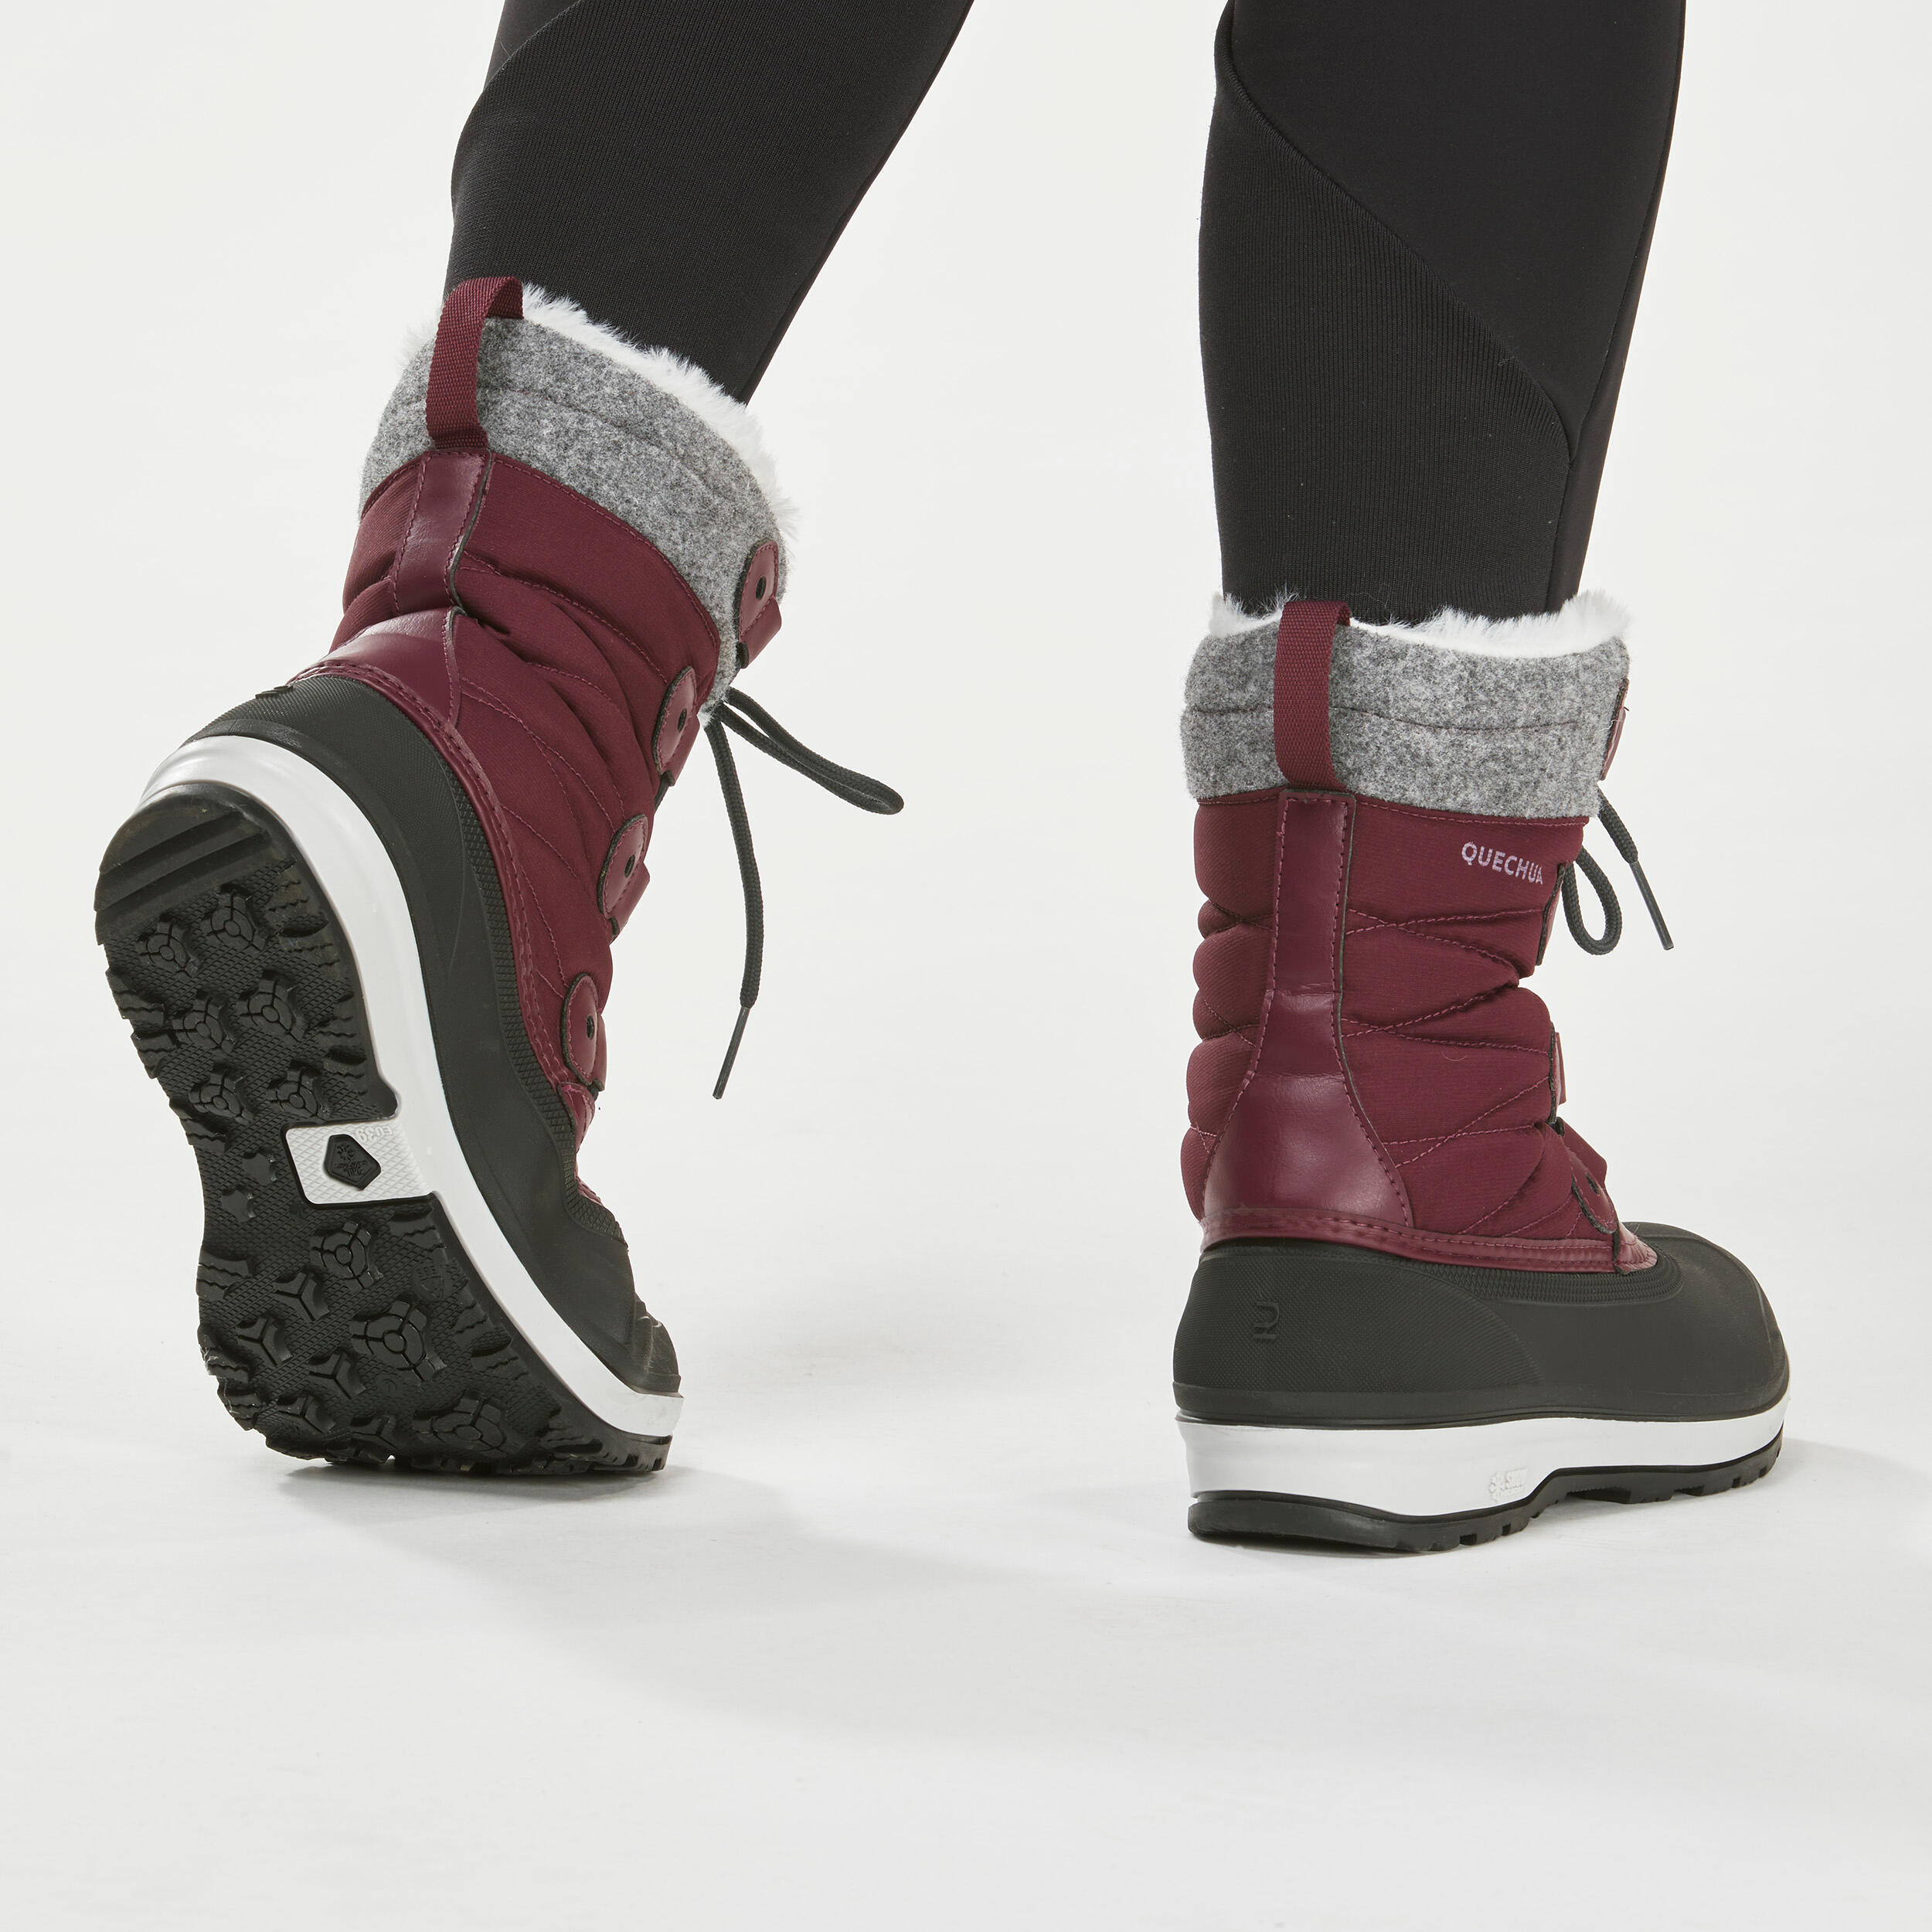 Women's waterproof warm snow boots - SH500 high boot  5/7